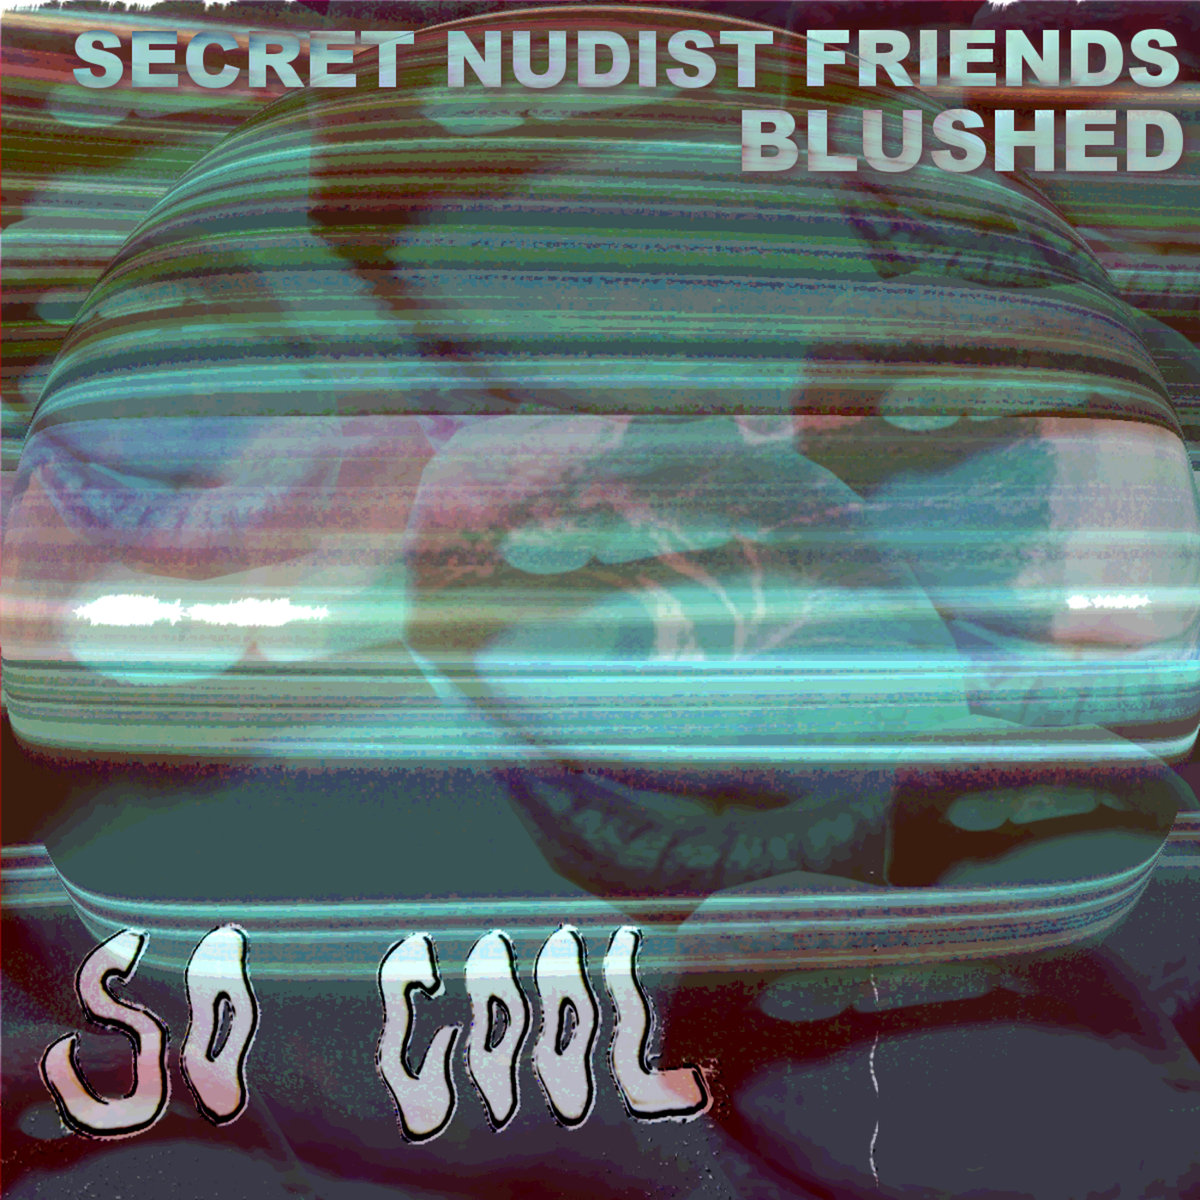 Blushed / Secret Nudist Friends - So Cool